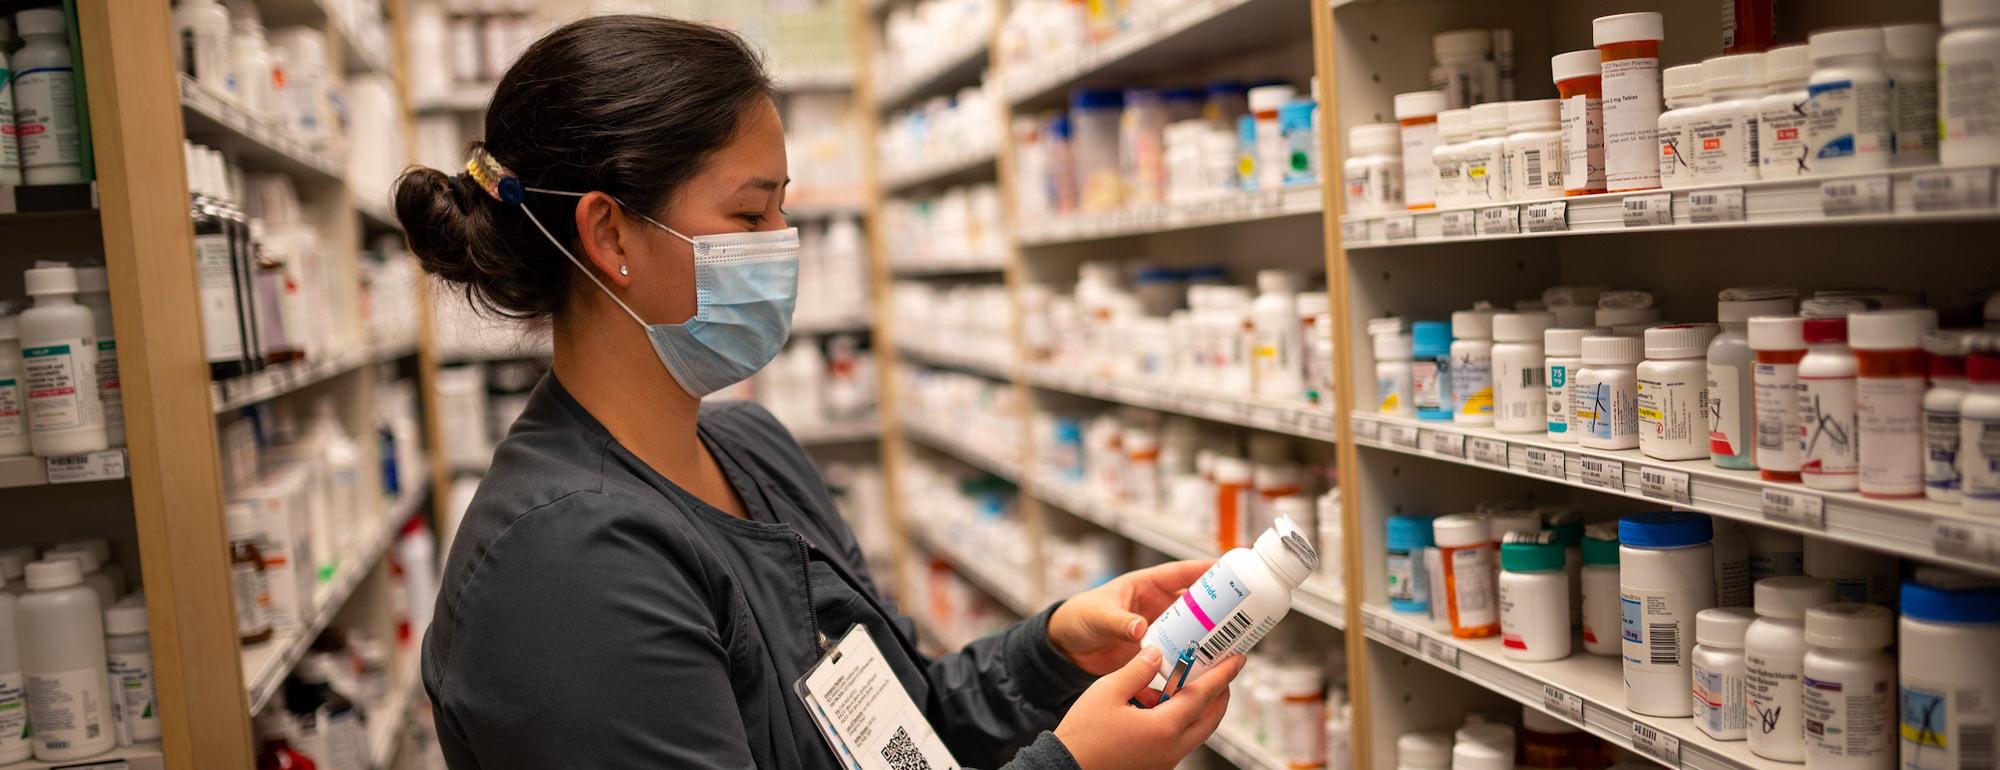 A woman examines a shelf of prescription medicine